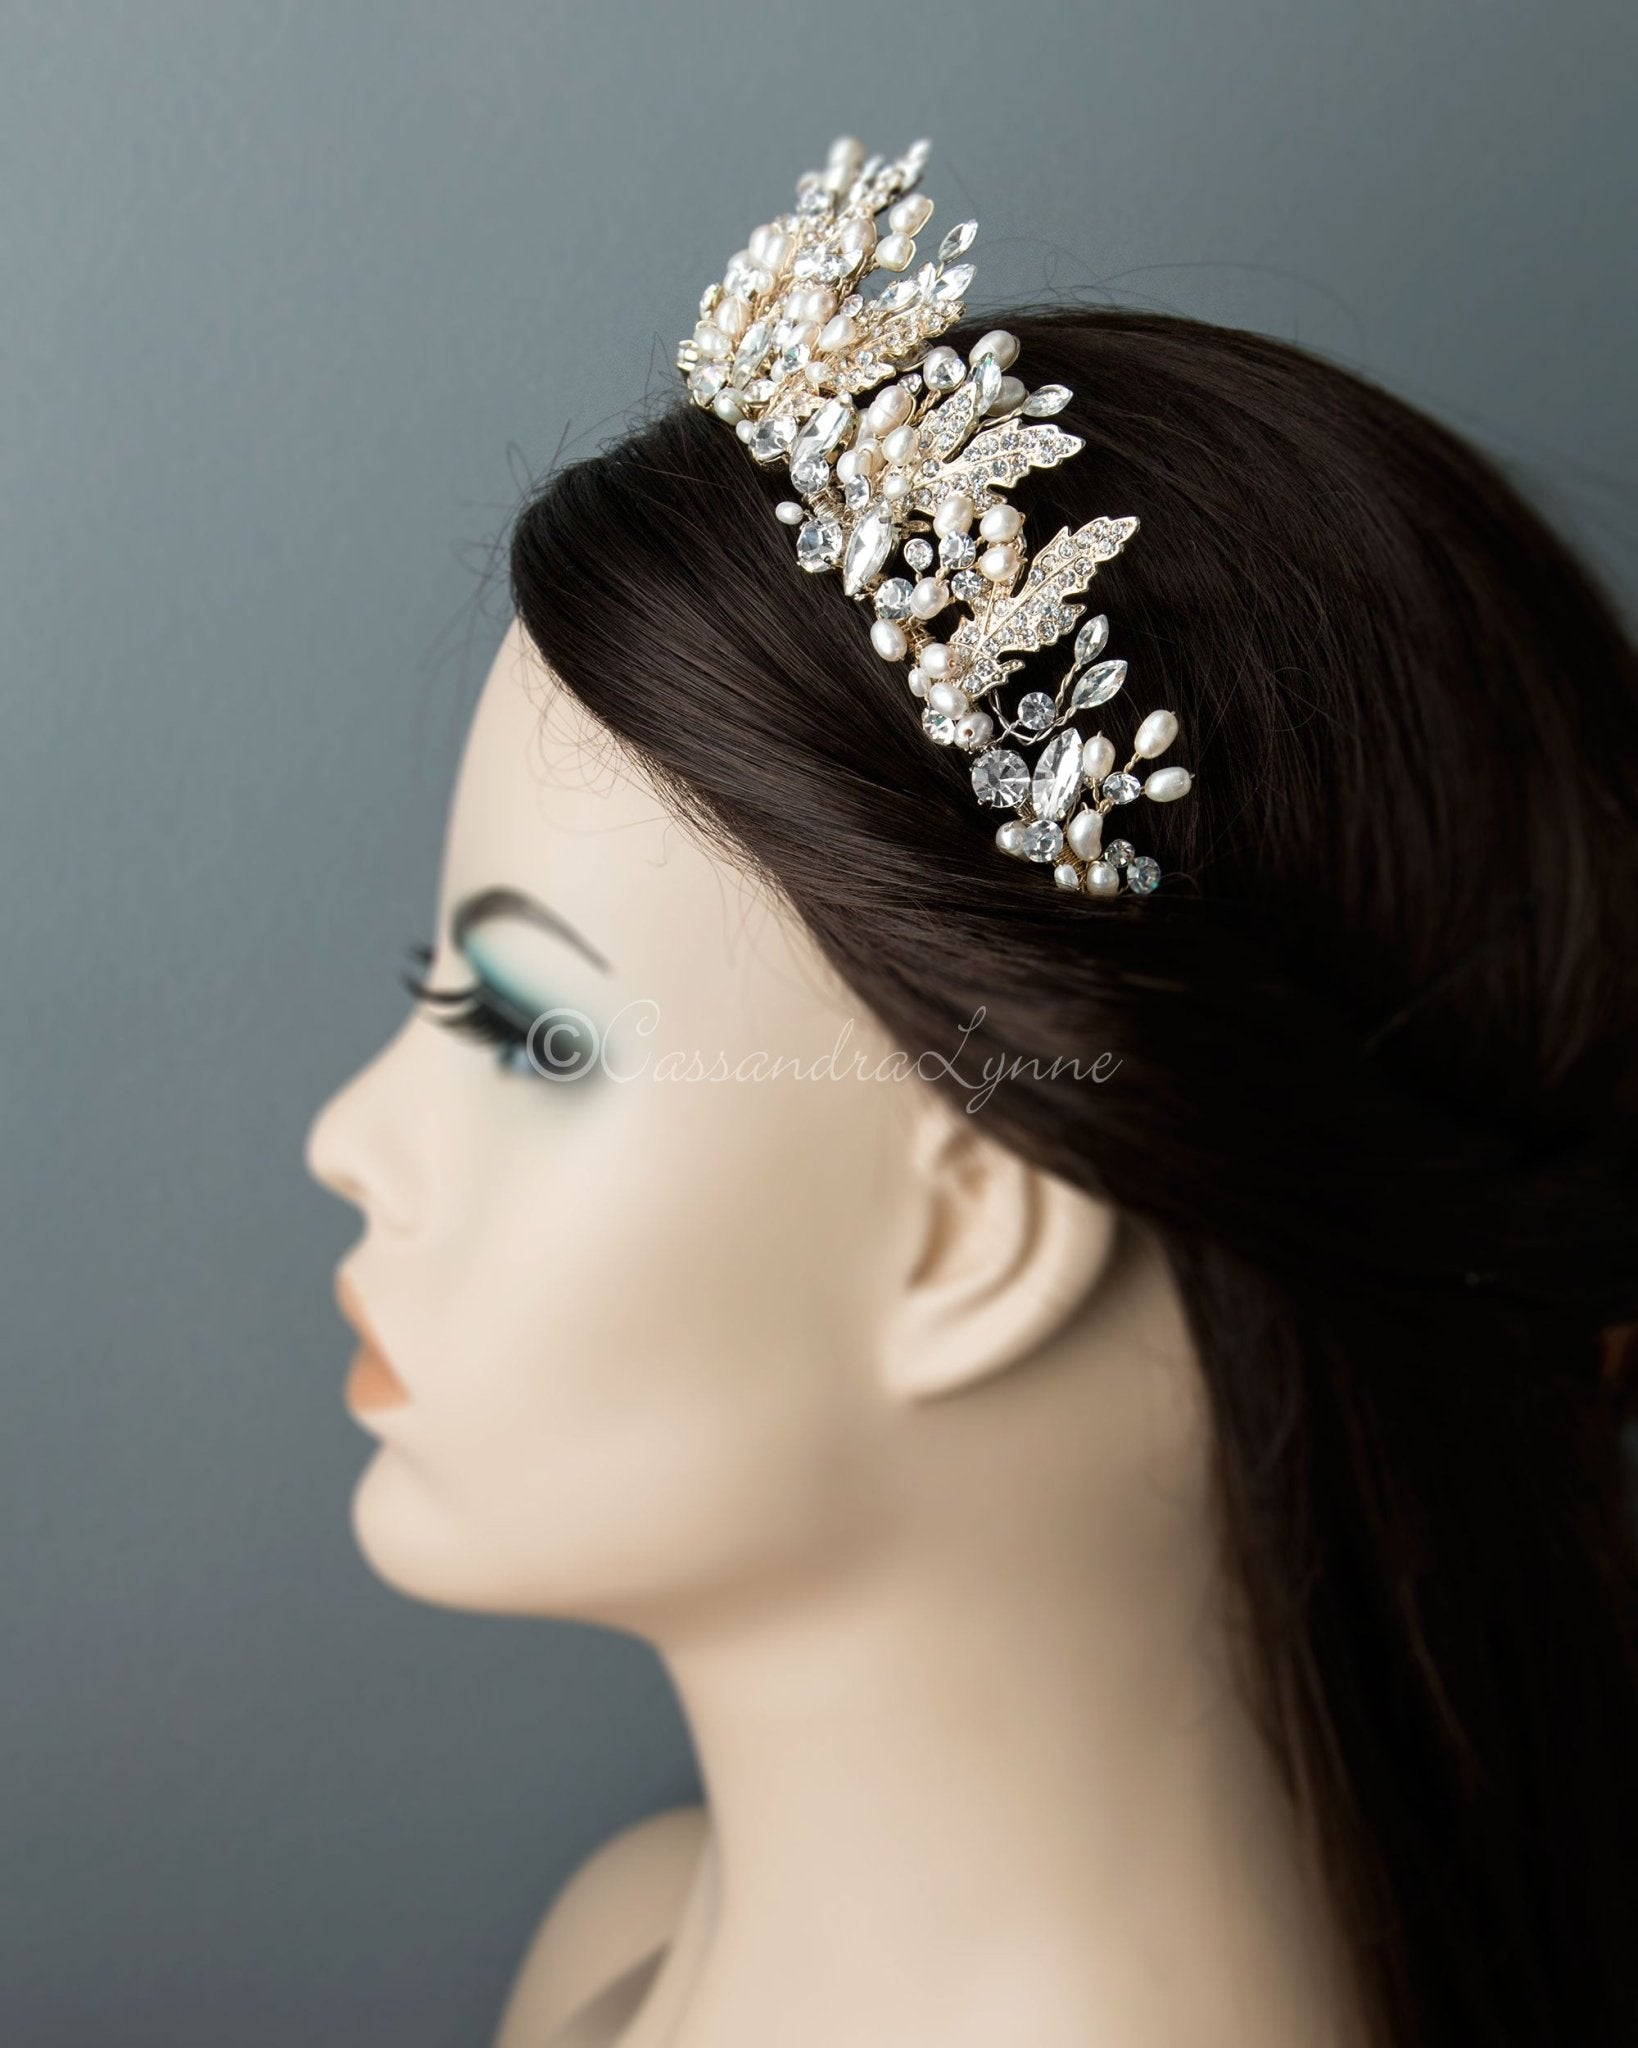 Gold Pearl Wedding Crown - Cassandra Lynne